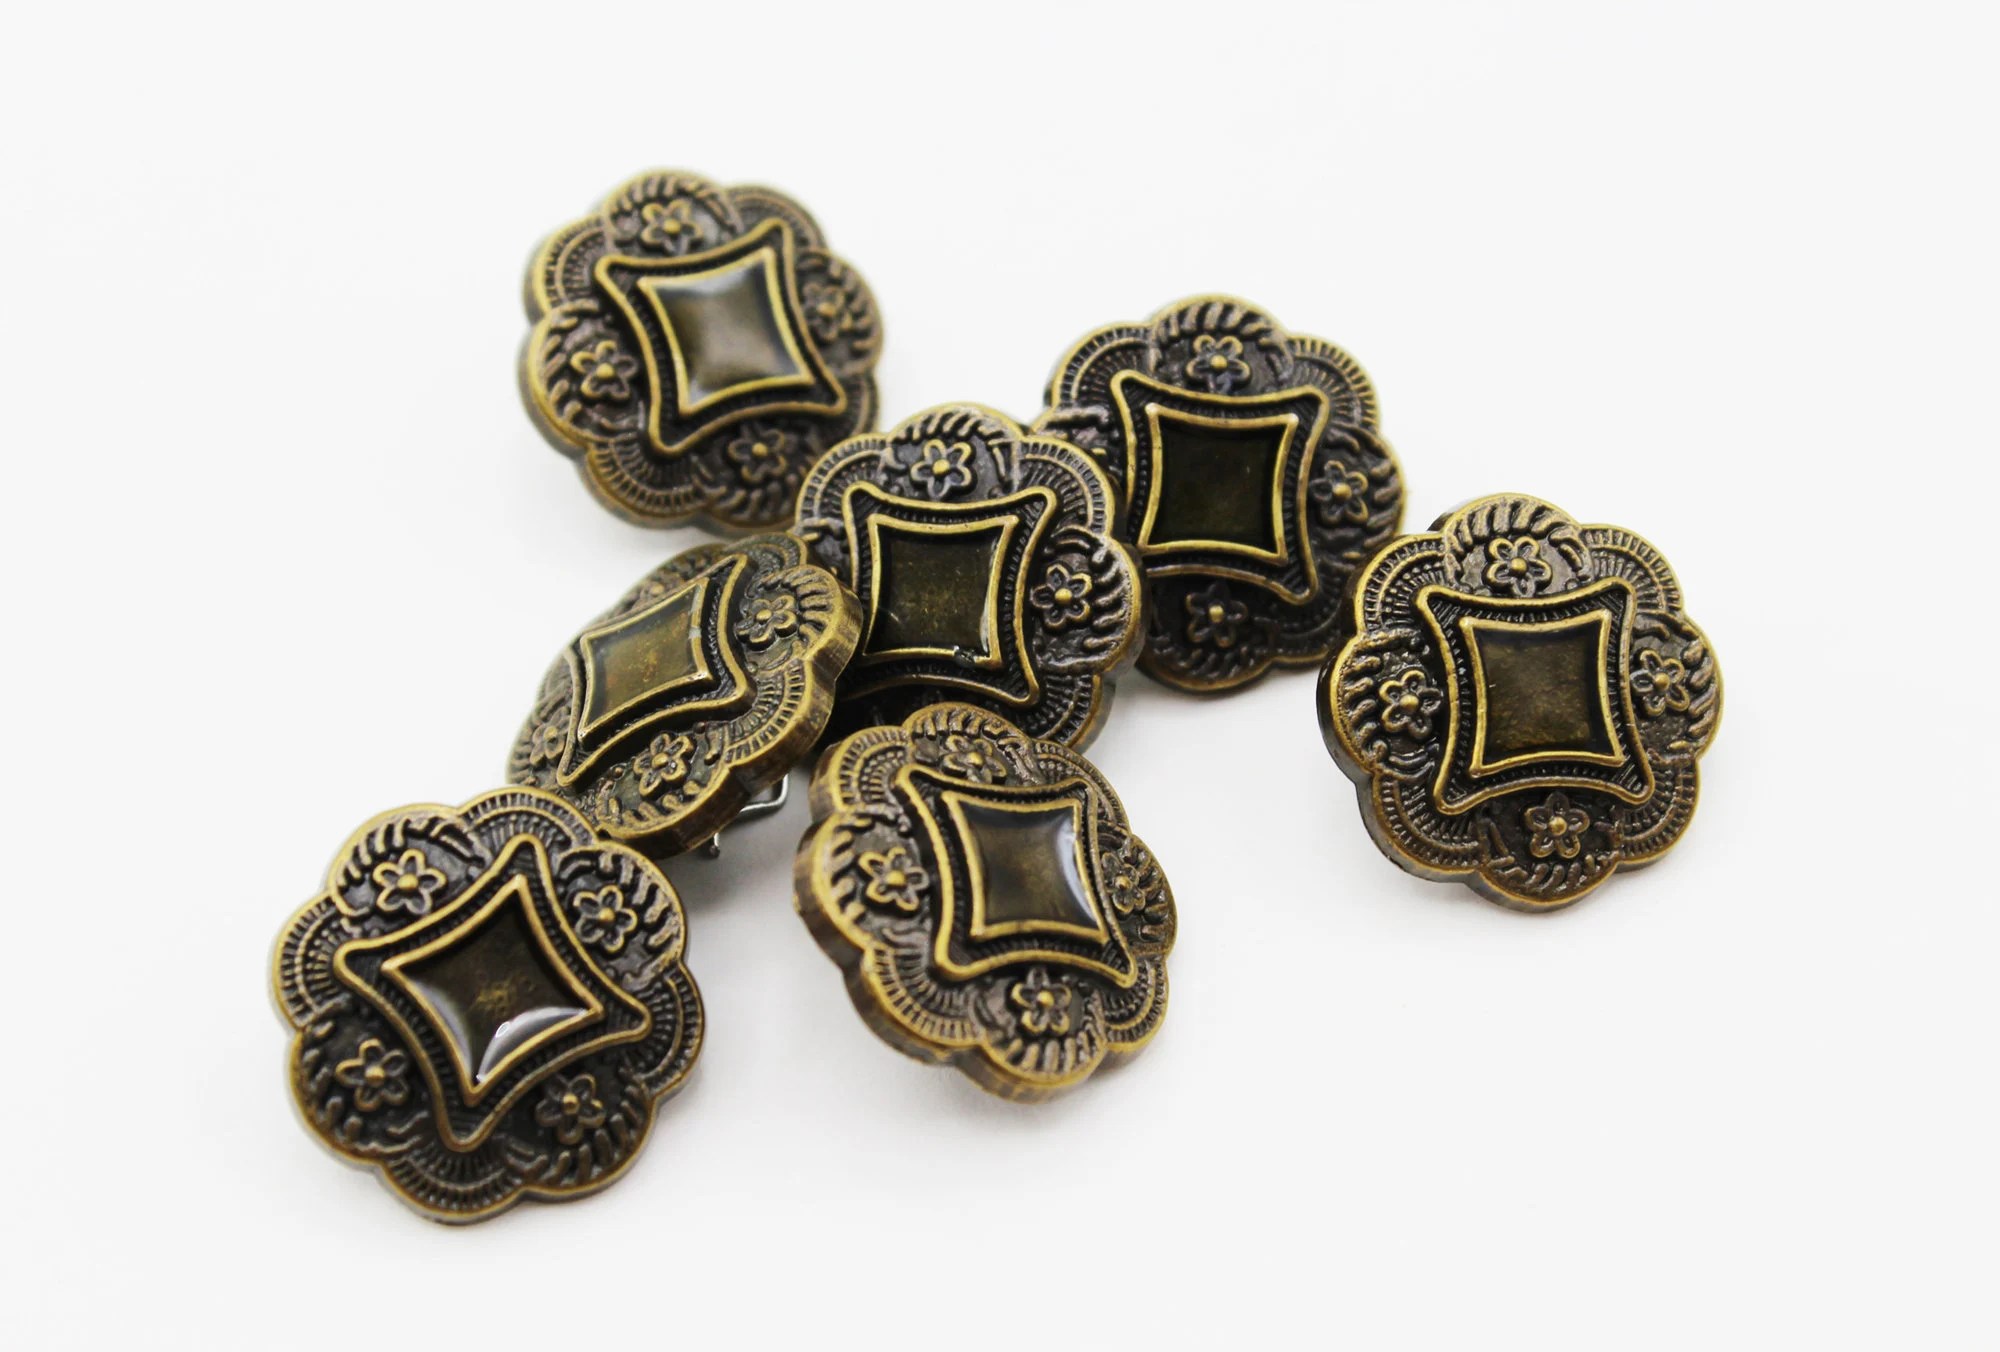 Fancy Bronze Colored Plastic Floral  3/4" (19mm) Round Shank Buttons - Set of 7 - Victorian / Edwardian Revival, Vintage